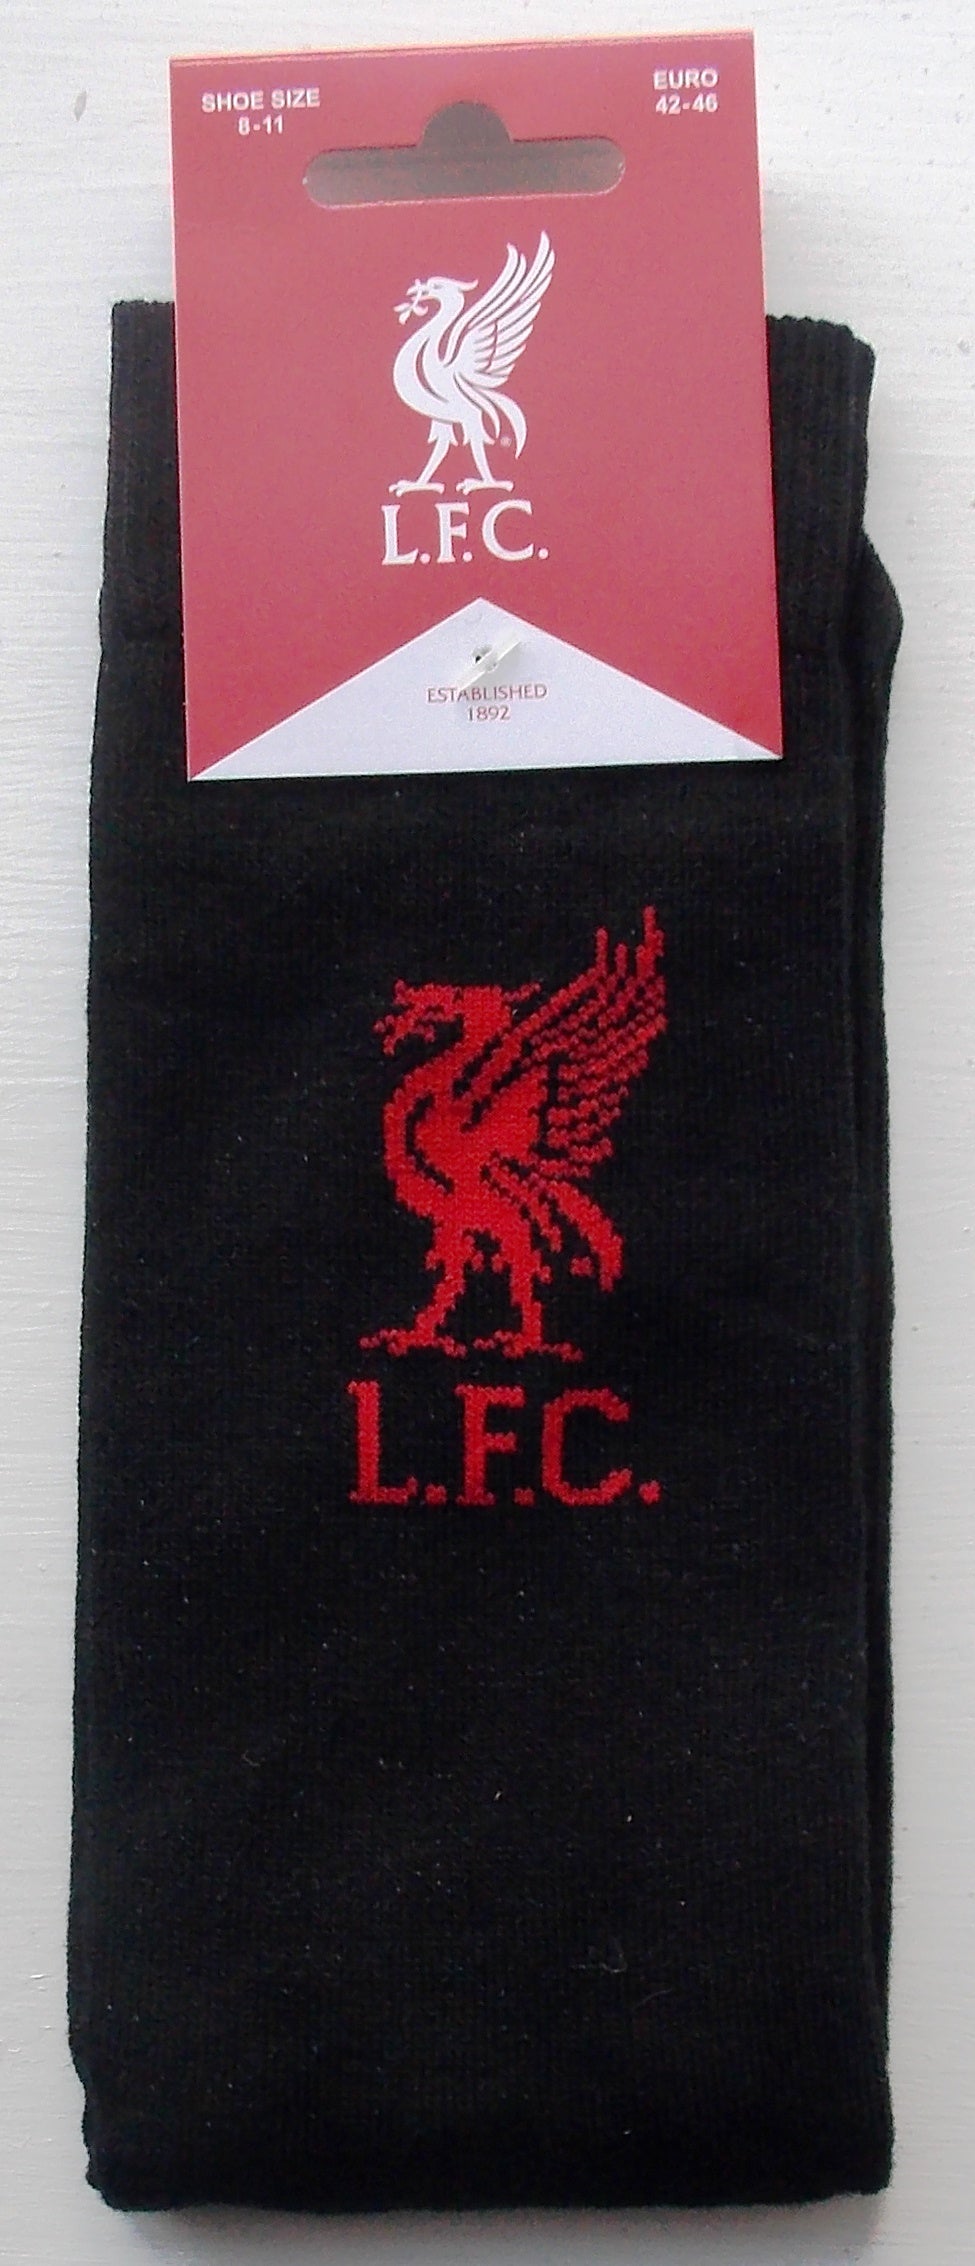 Liverpool FC Logo Socks - Black -Size 8-11. Polycotton